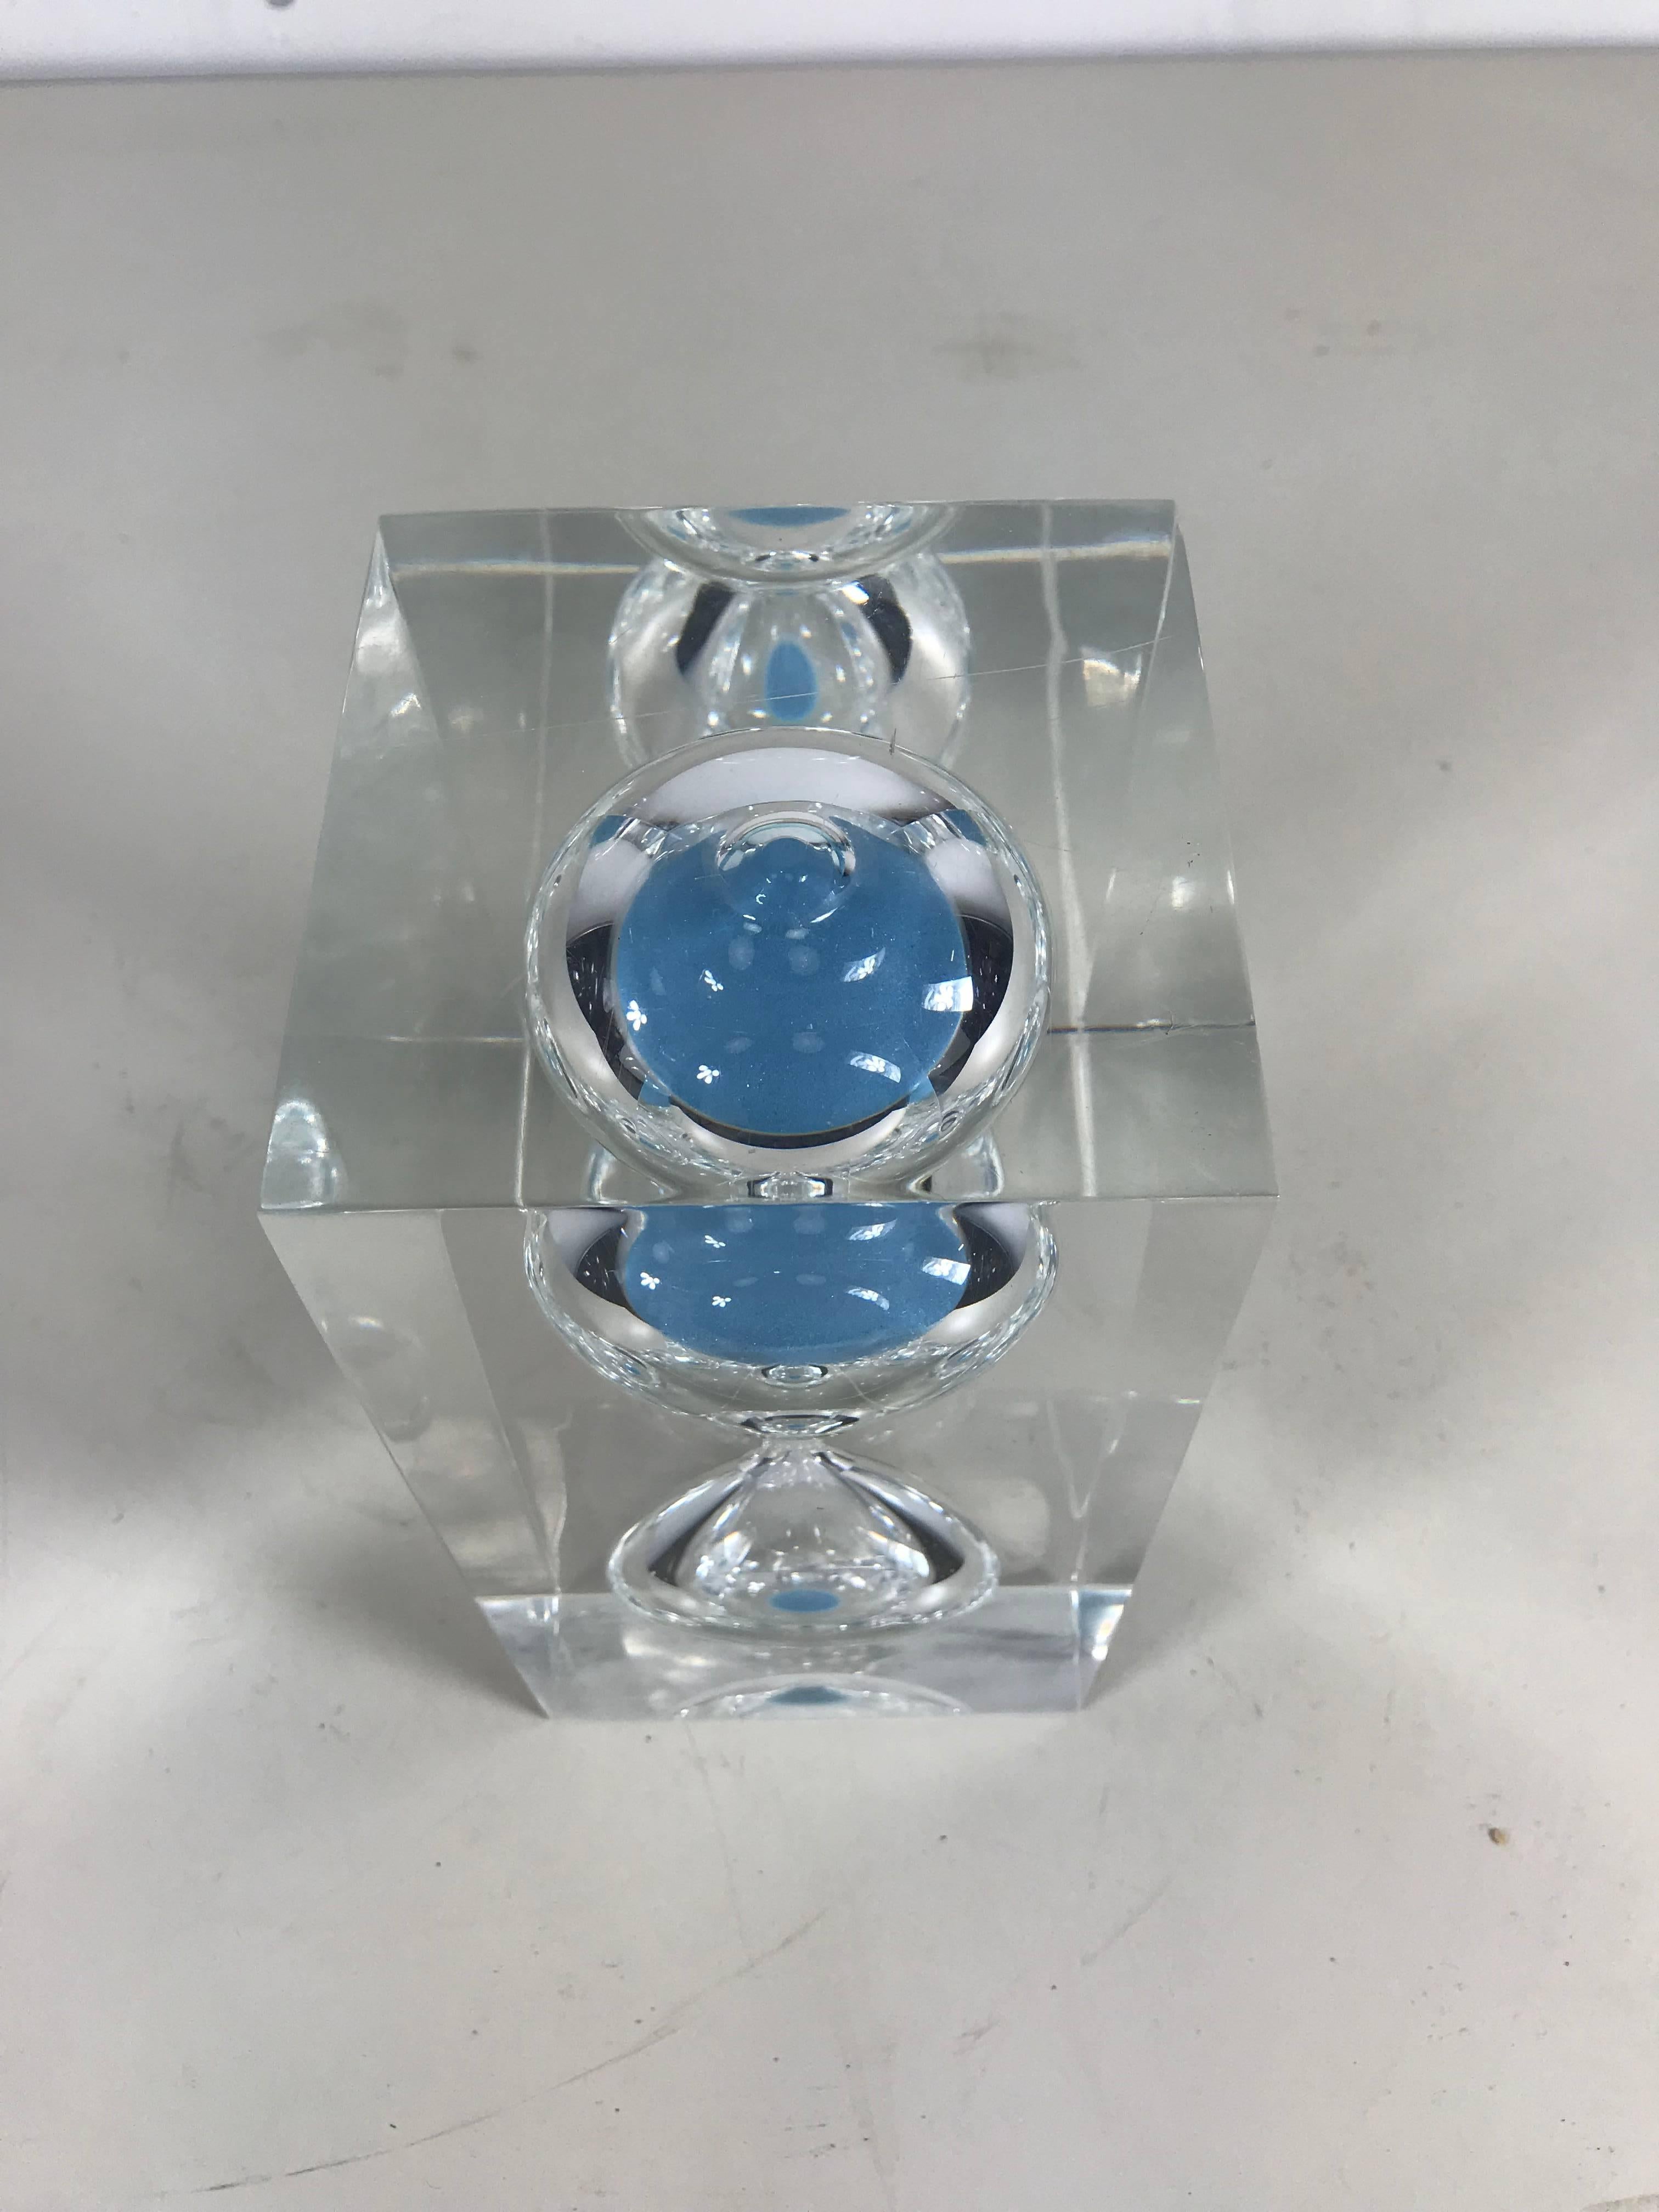 Italian Modernist Lucite Hourglass Sculpture with Ice Blue Sand, Franco Scuderi